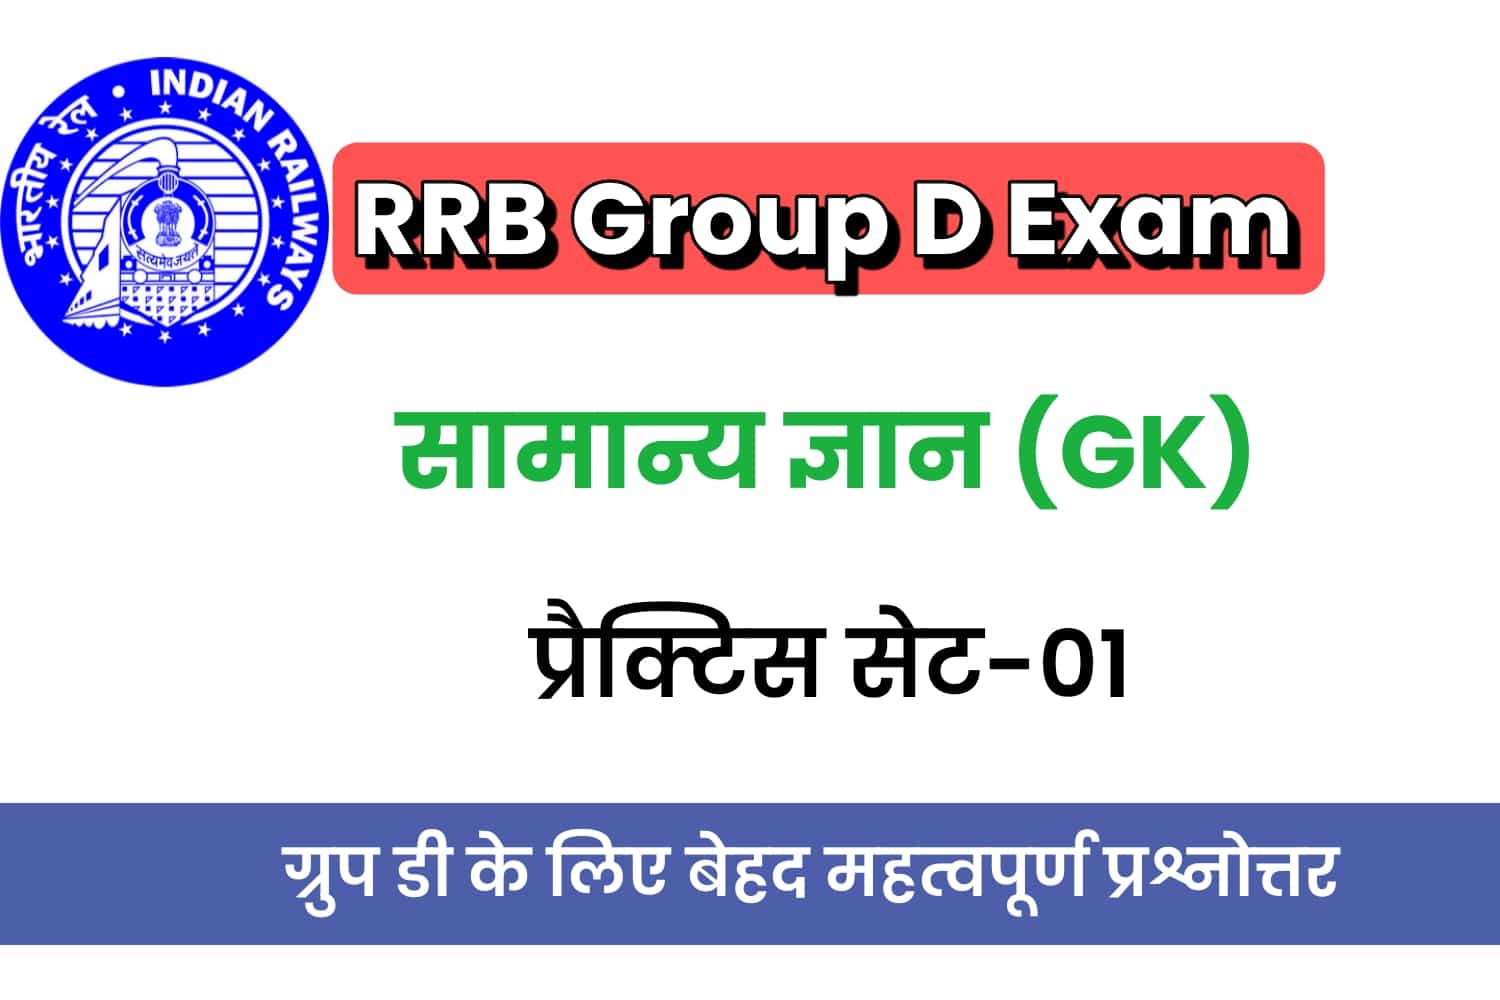 RRB Group D General Knowledge Practice set-01